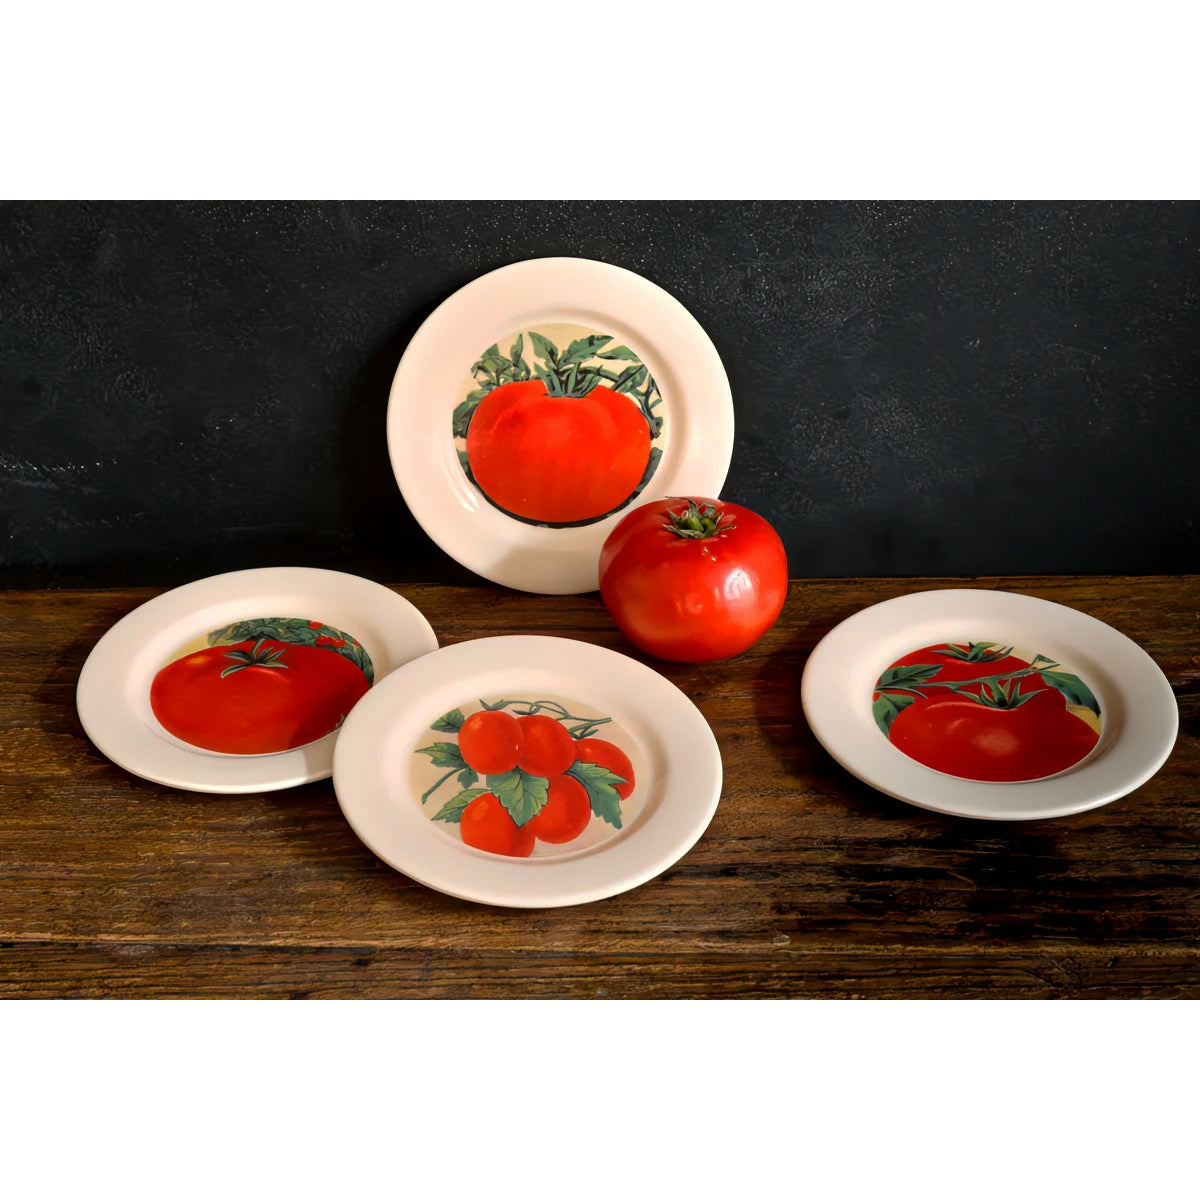 Set 4 of Vintage Inspired Tomato Plates